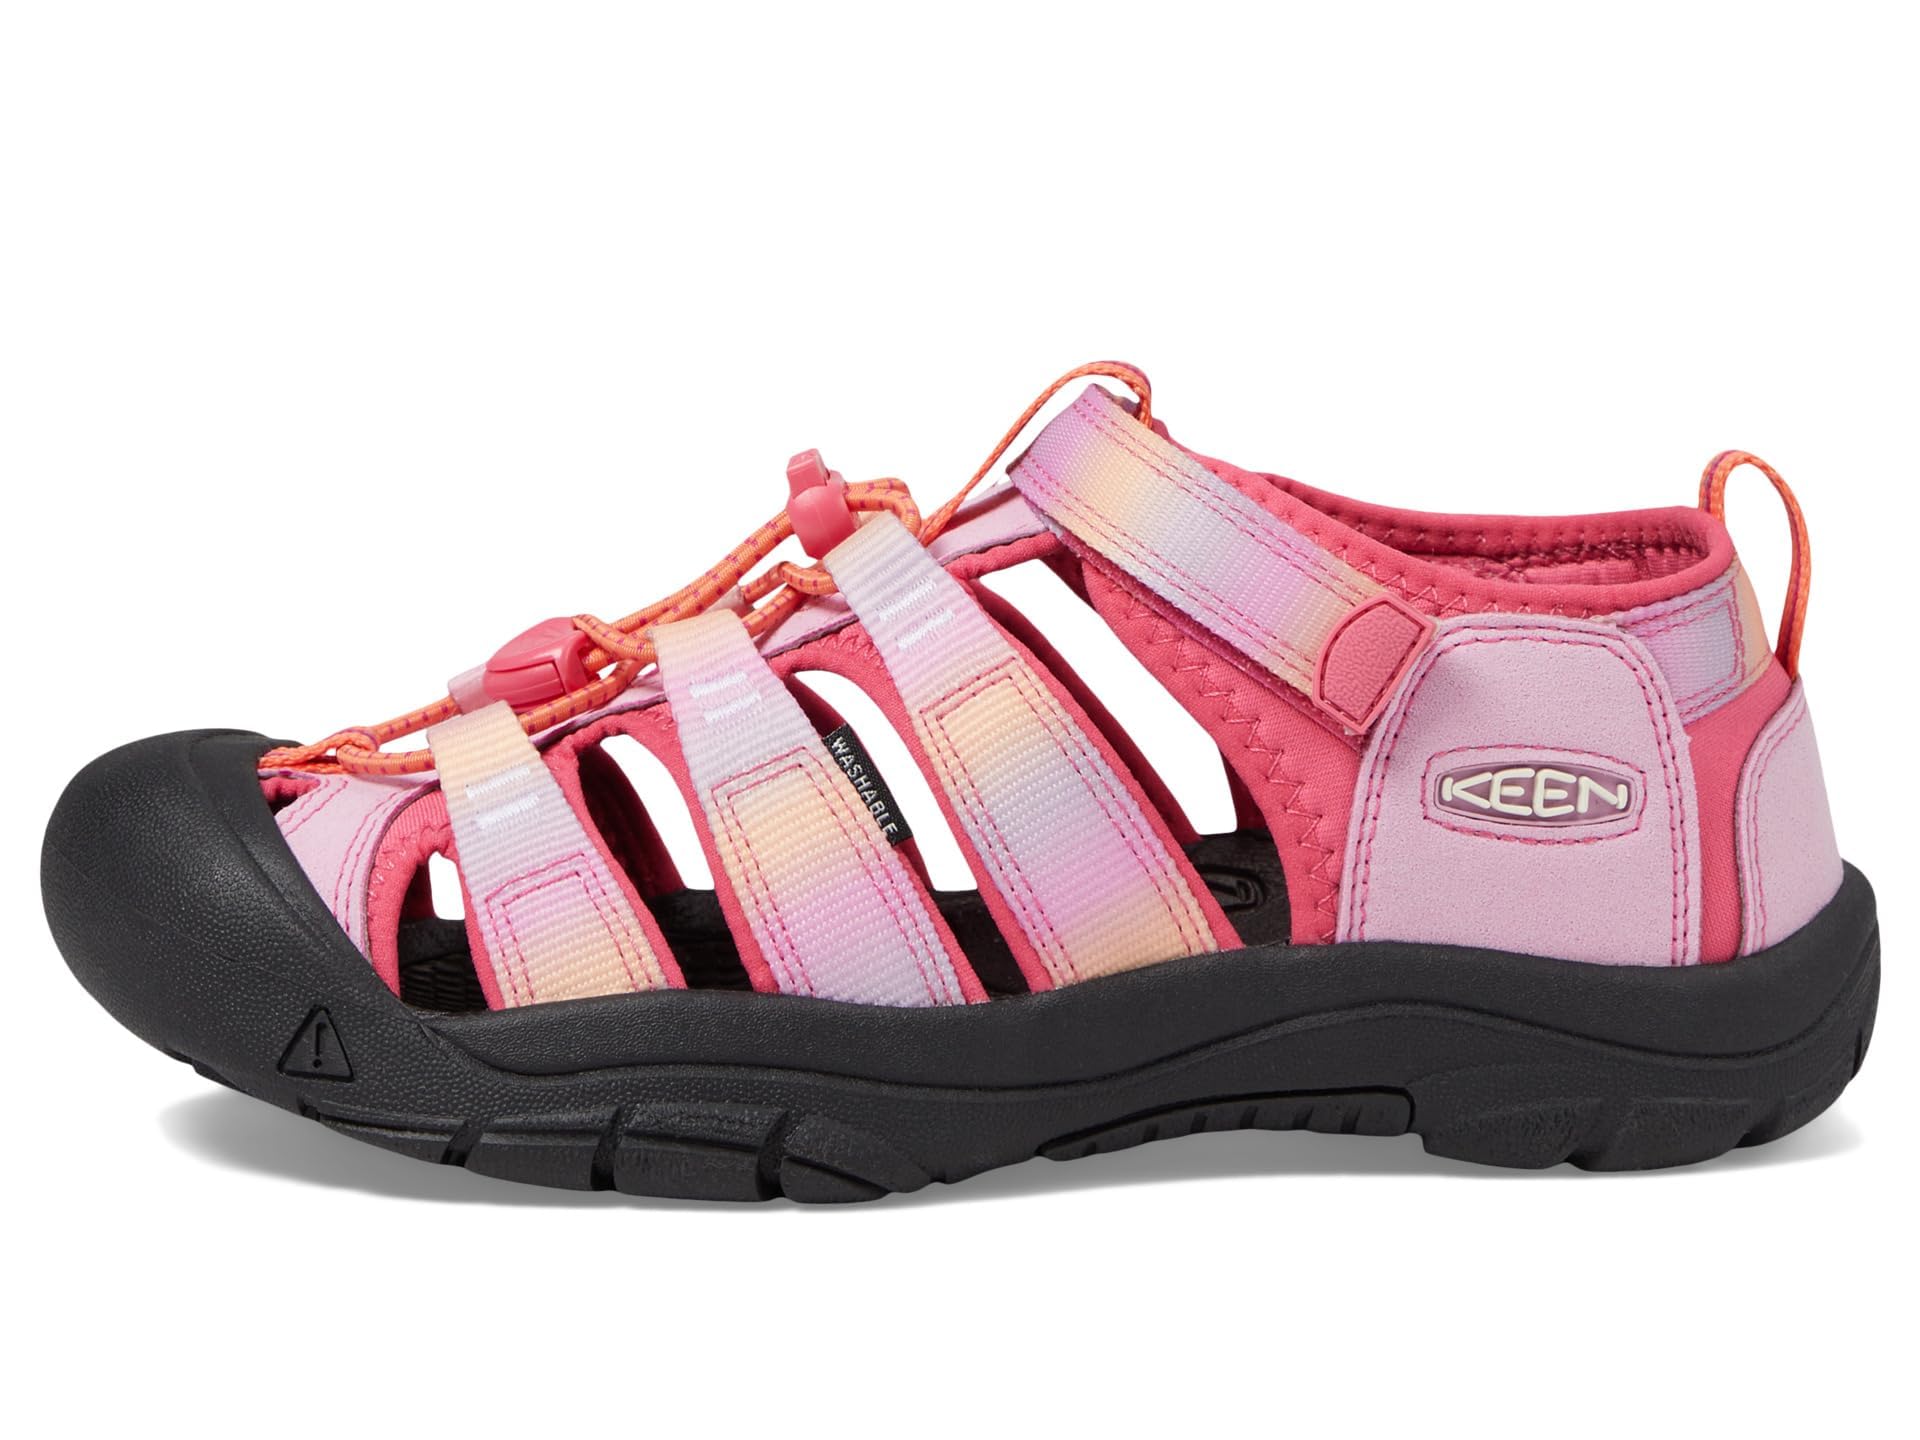 KEEN Newport H2 Closed Toe Water Sandals, Hot Pink/Pastel Lavender, 4 US Unisex Big Kid